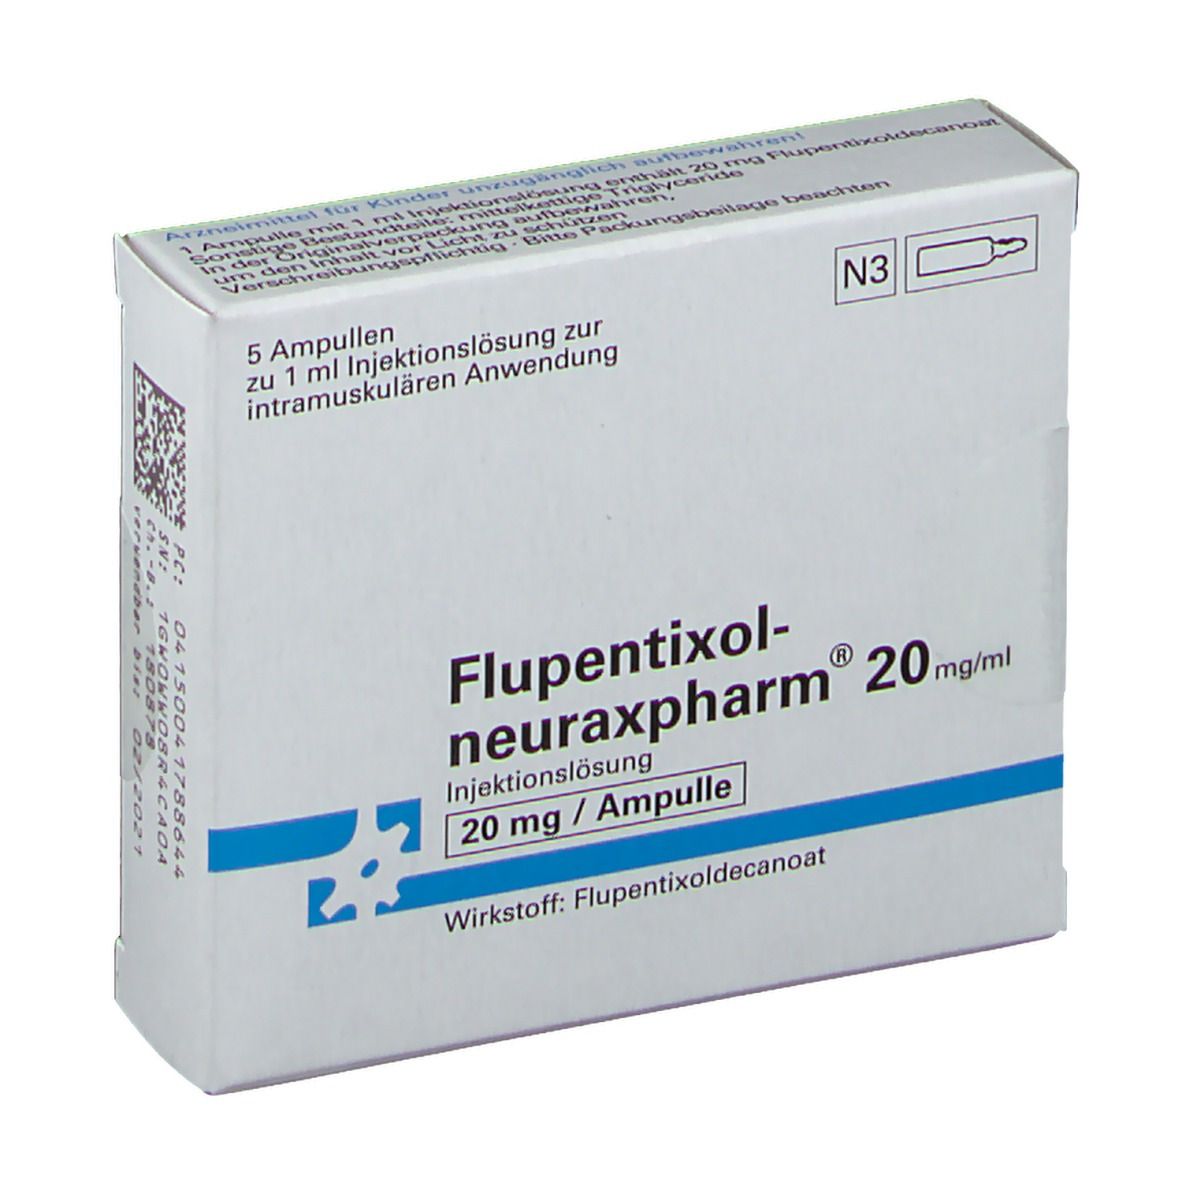 Flupentixol-neuraxpharm® 20 mg/ml